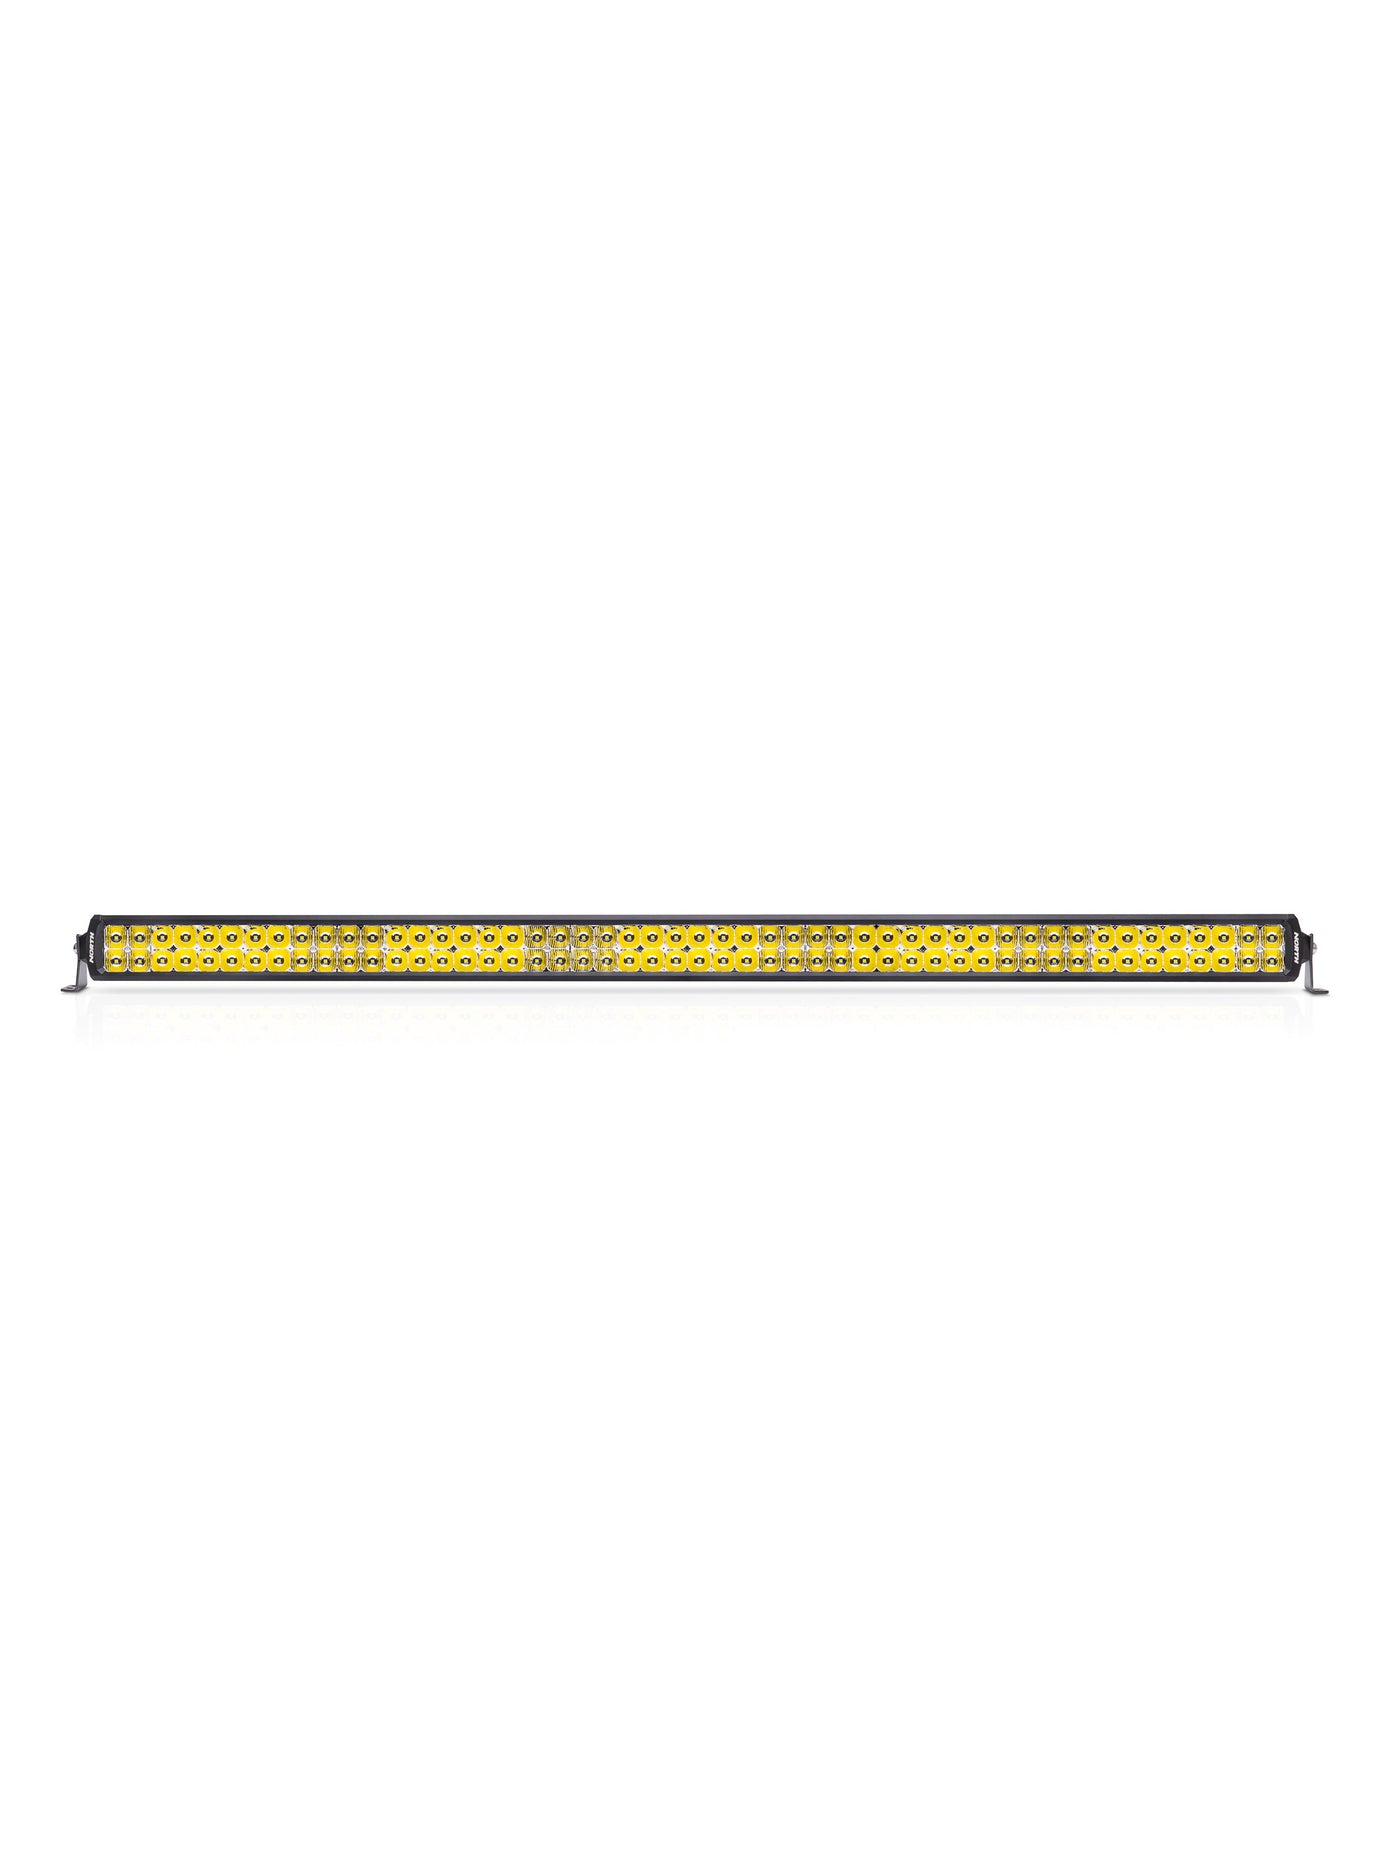 50" Dual Row LED Light Bar - Flood/Spot Combo Beam - North Lights